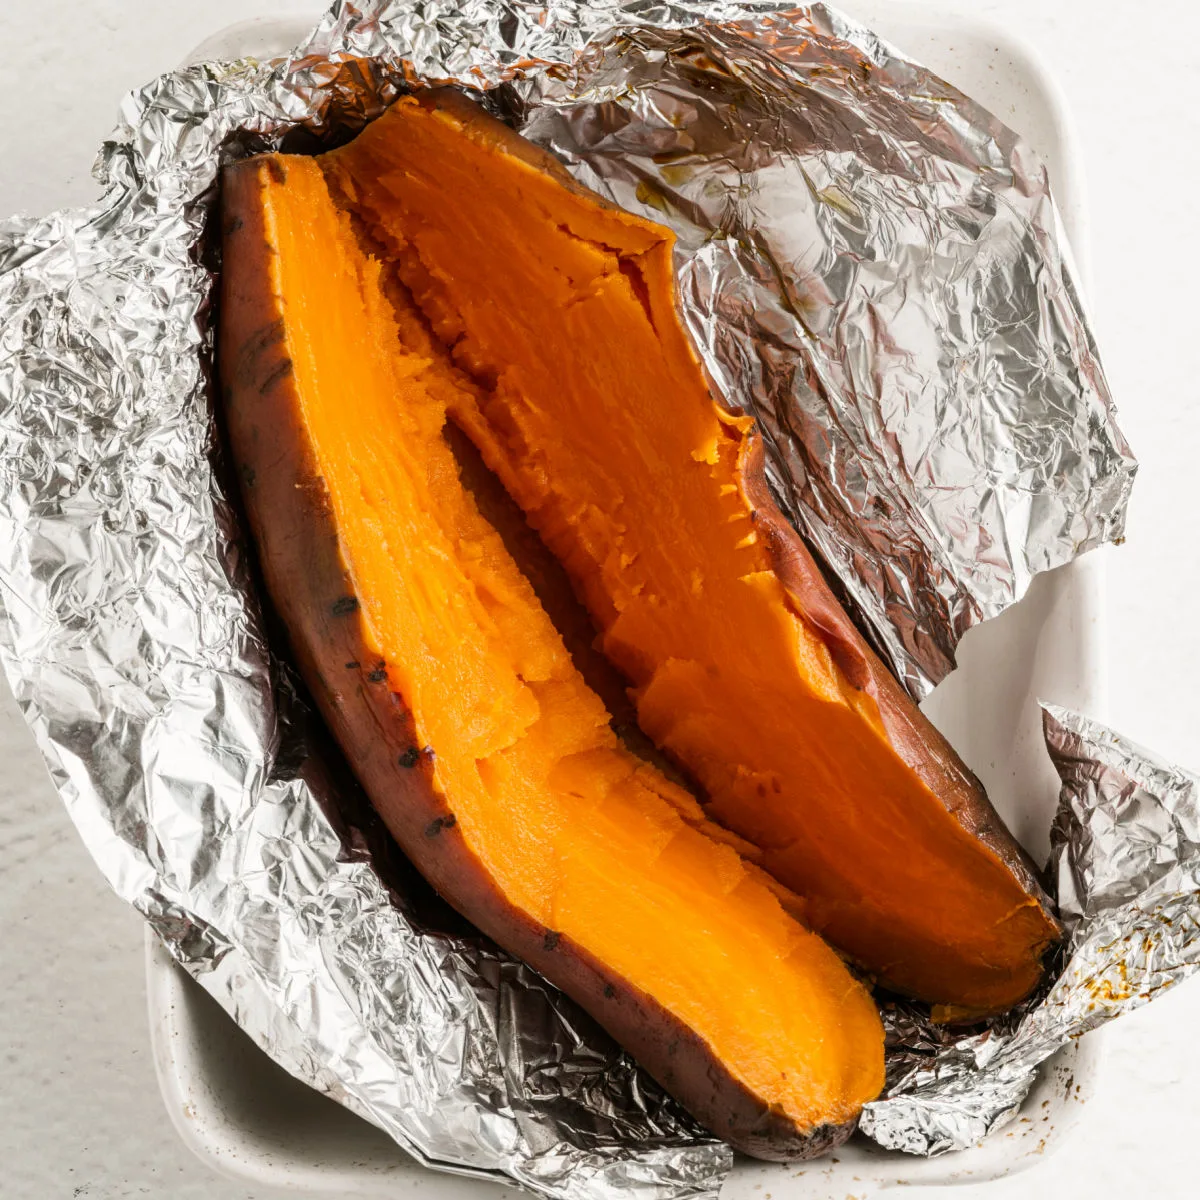 Sweet potato baked in foil.